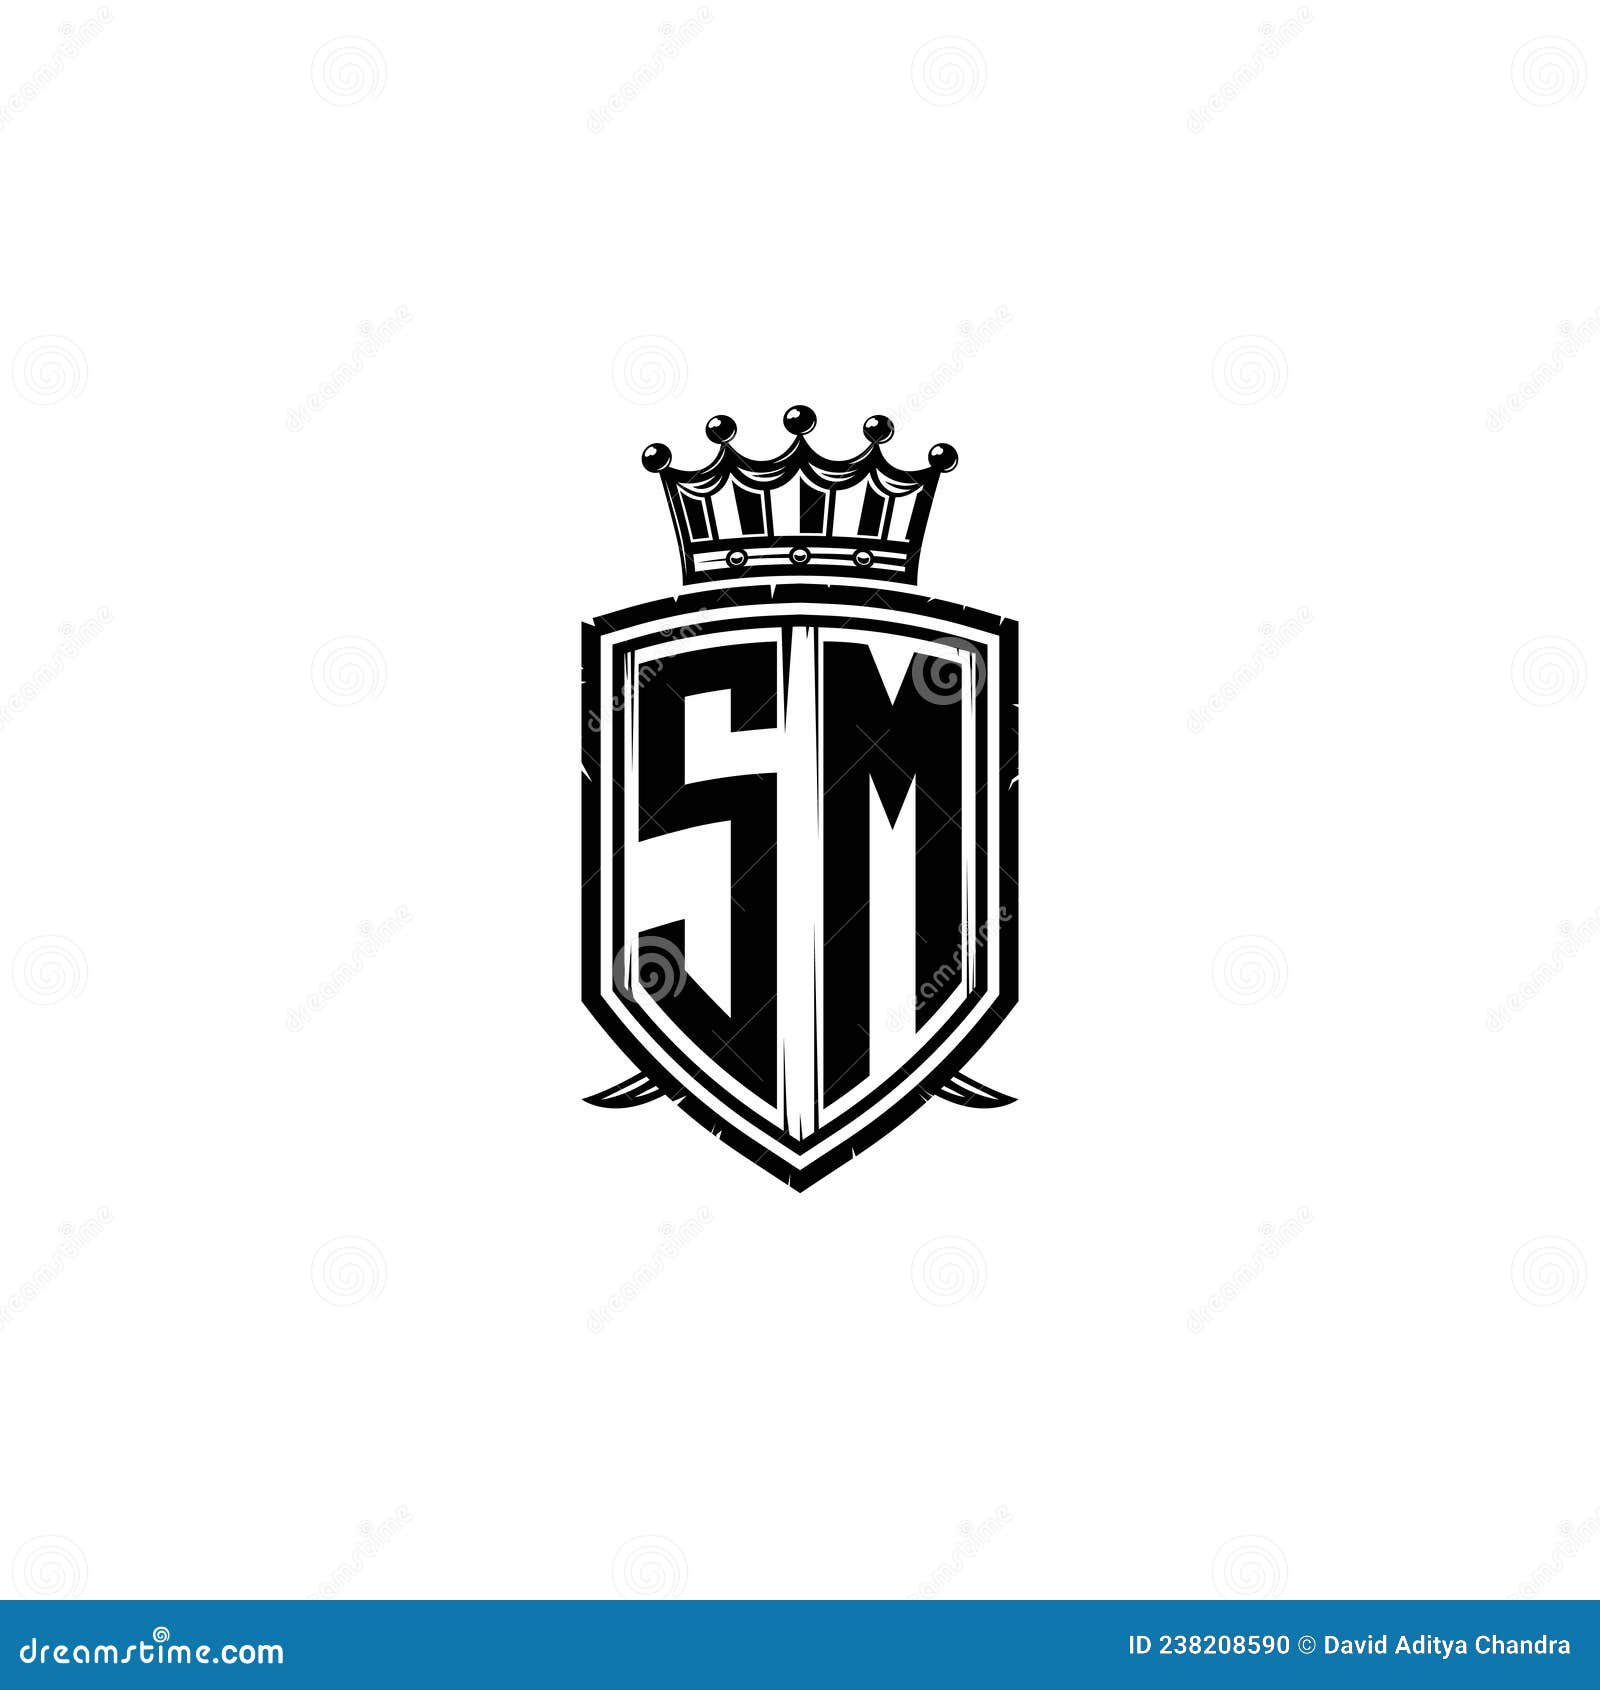 Sm logo monogram emblem style with crown shape Vector Image